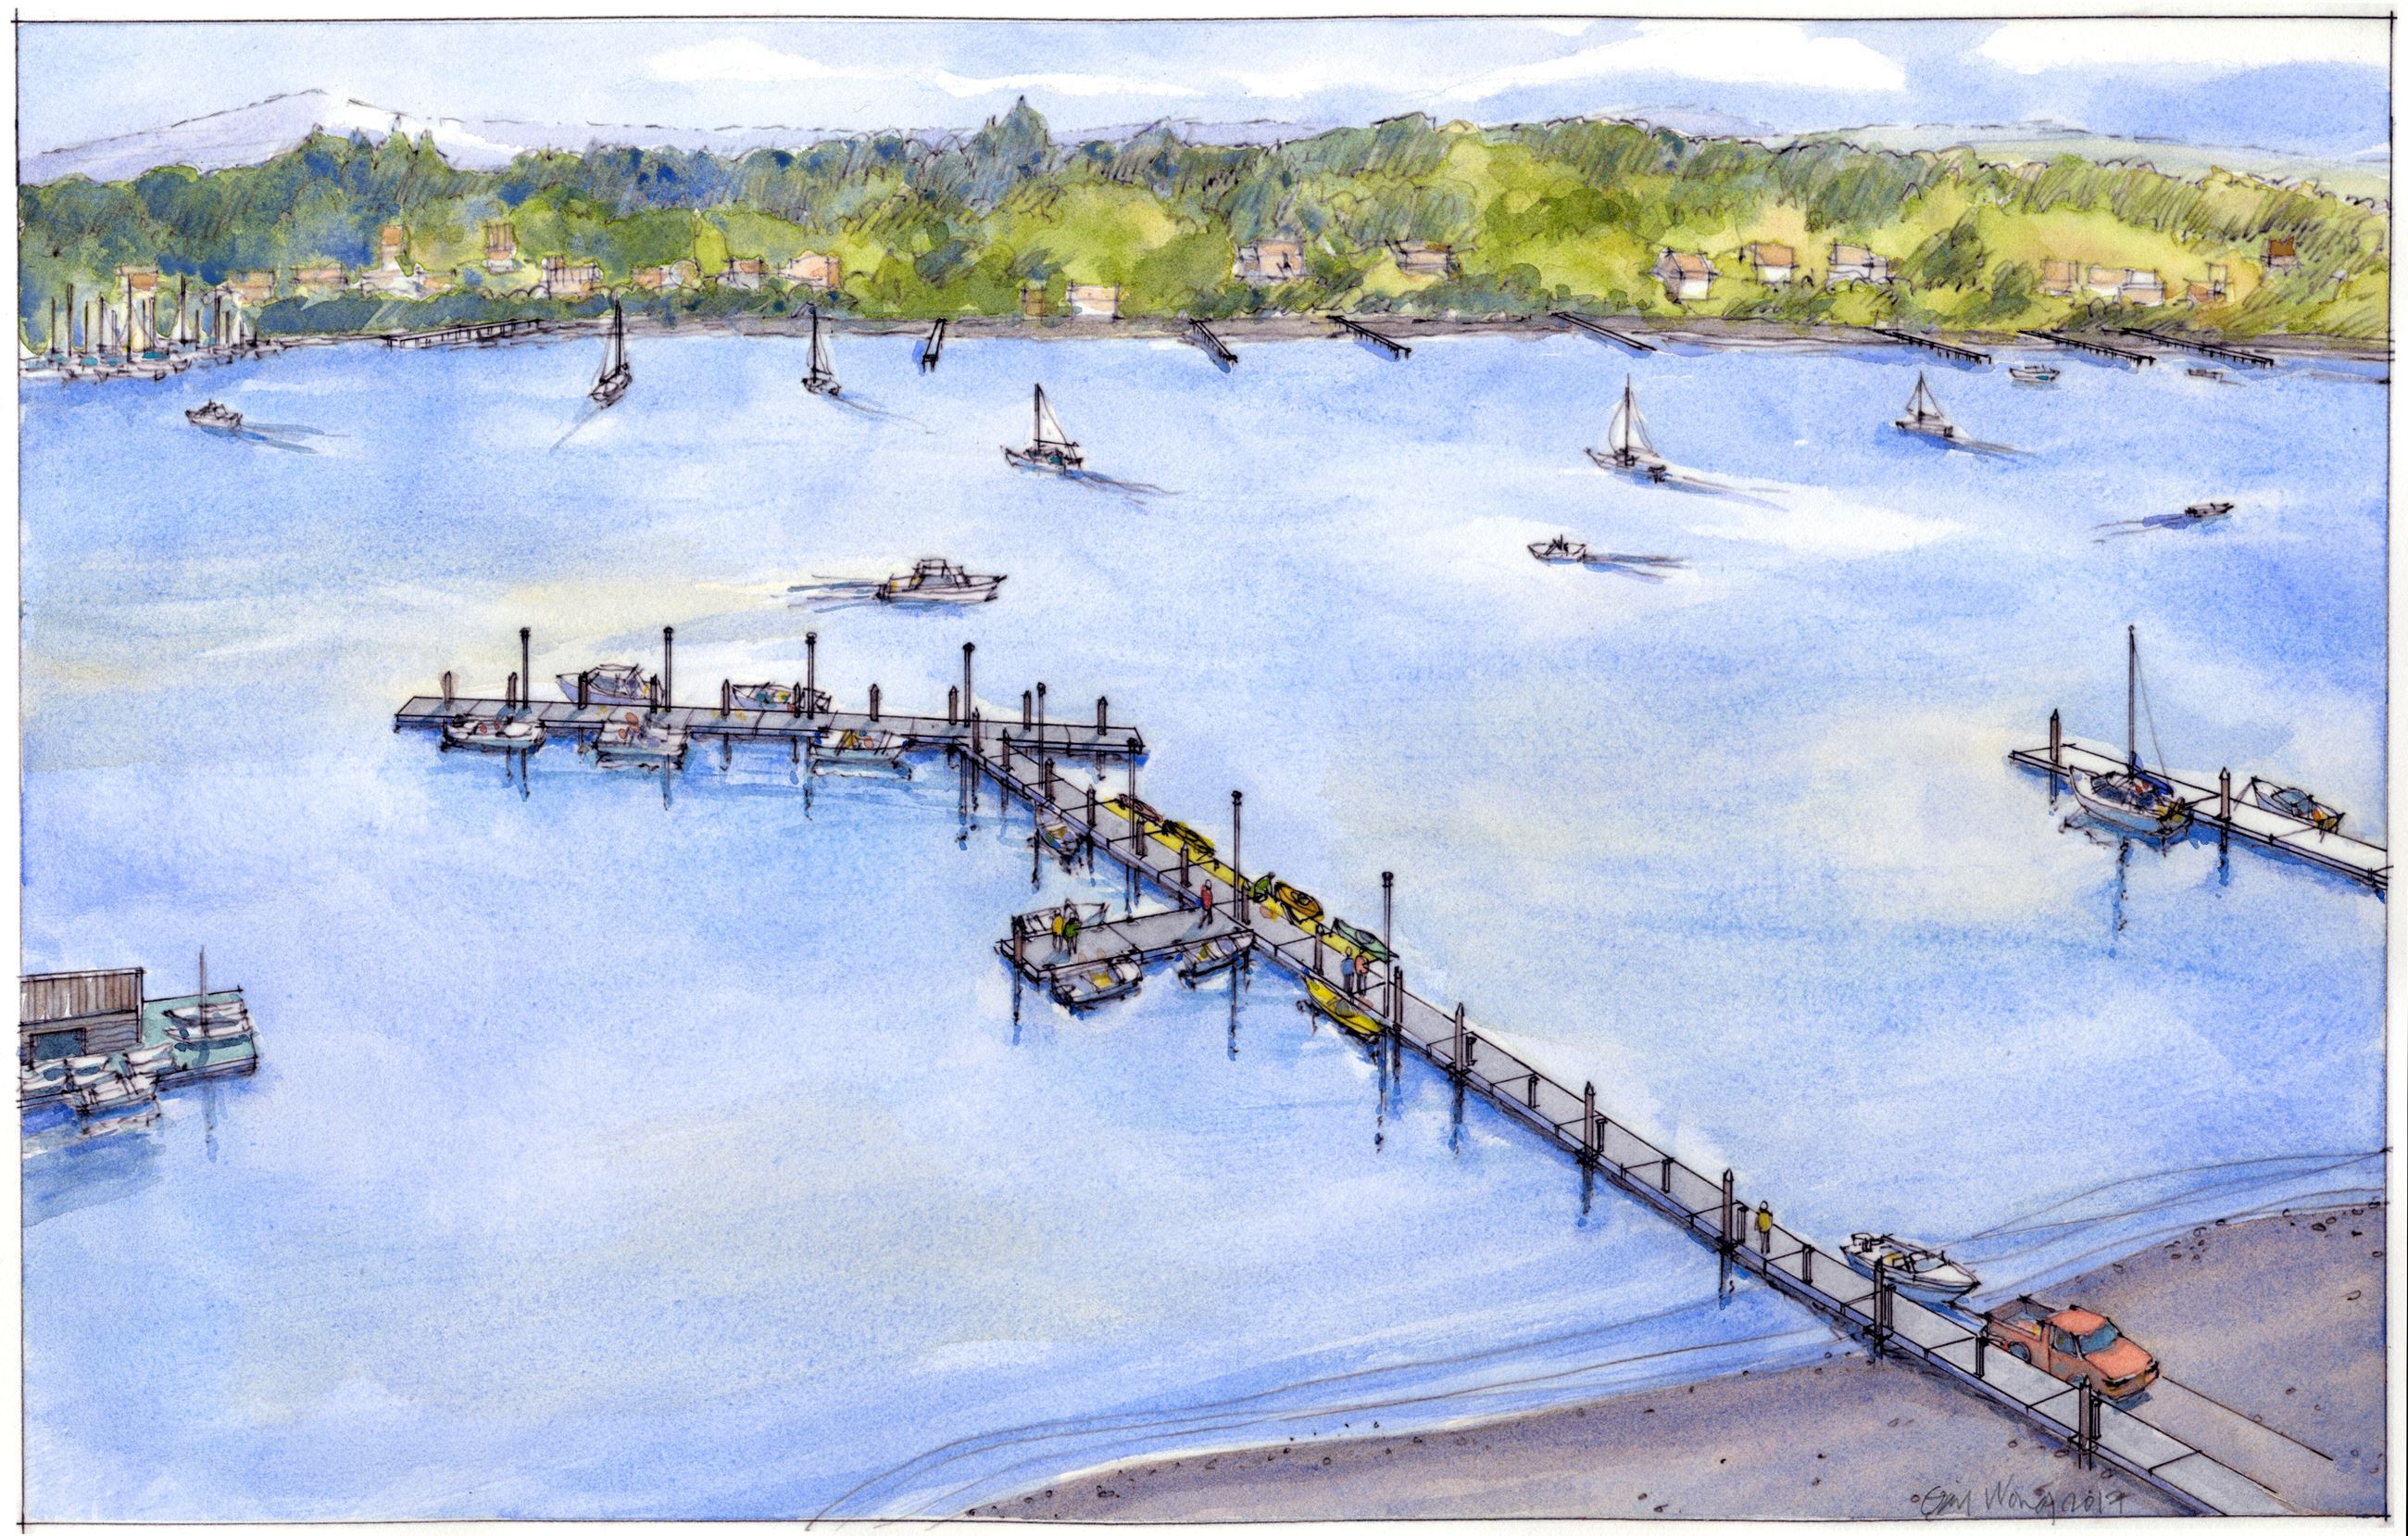 City Dock Improvements | Bainbridge Island, WA - Official Website